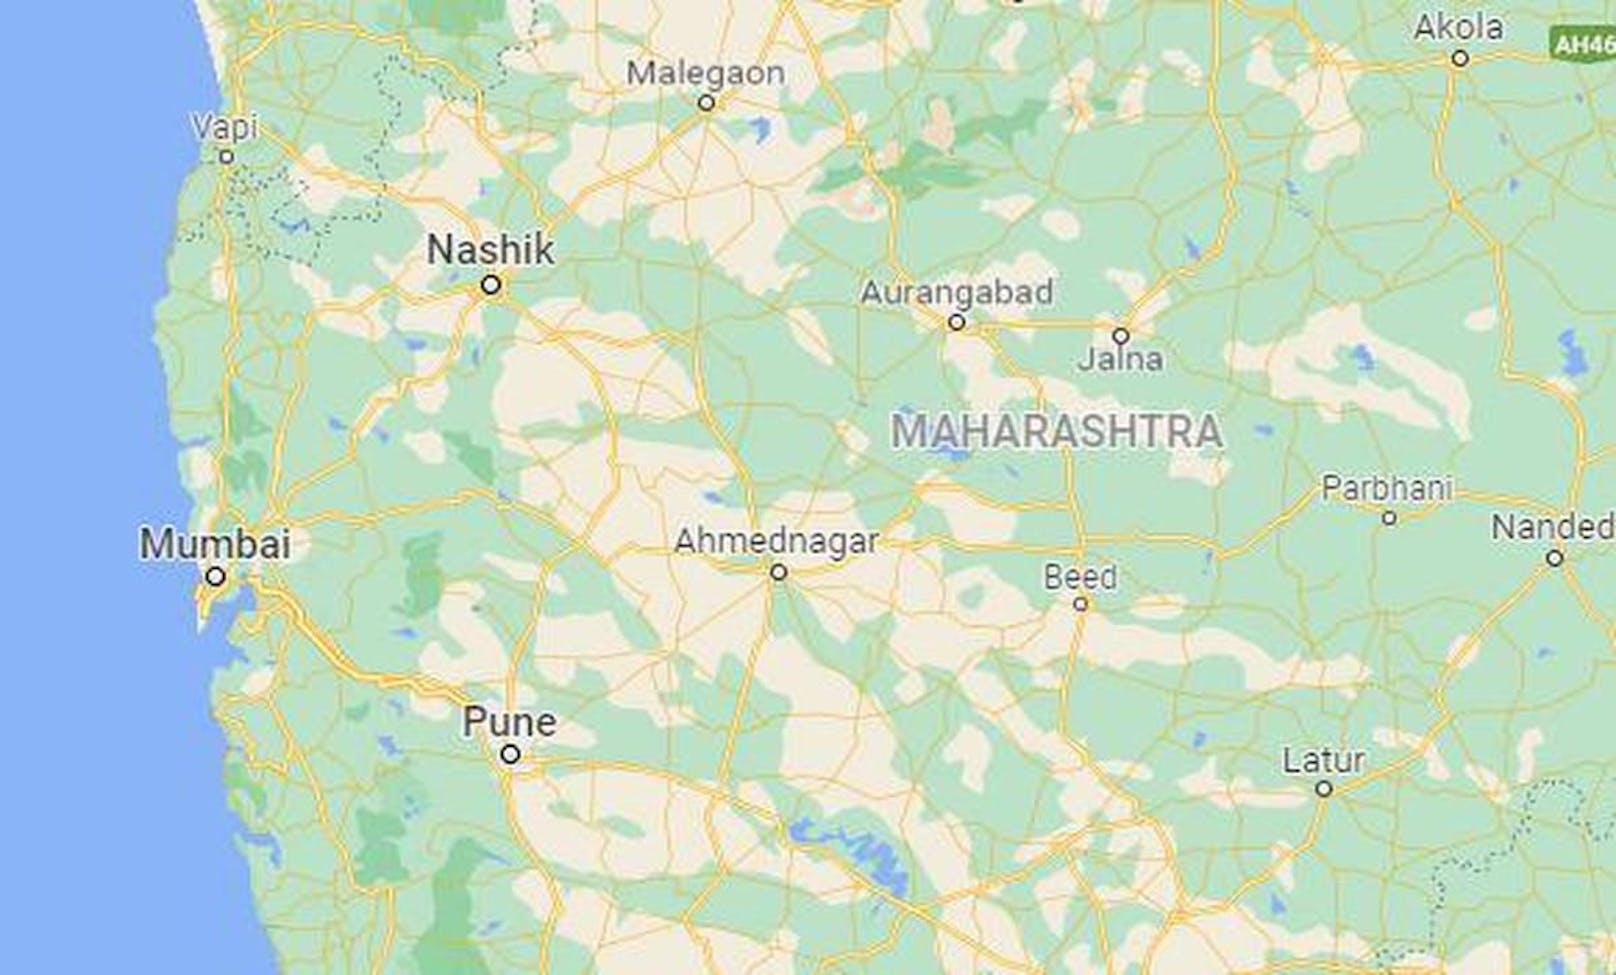 Die Tat ereignet sich nahe Ahmednagar im Bundesstaat Maharashtra.